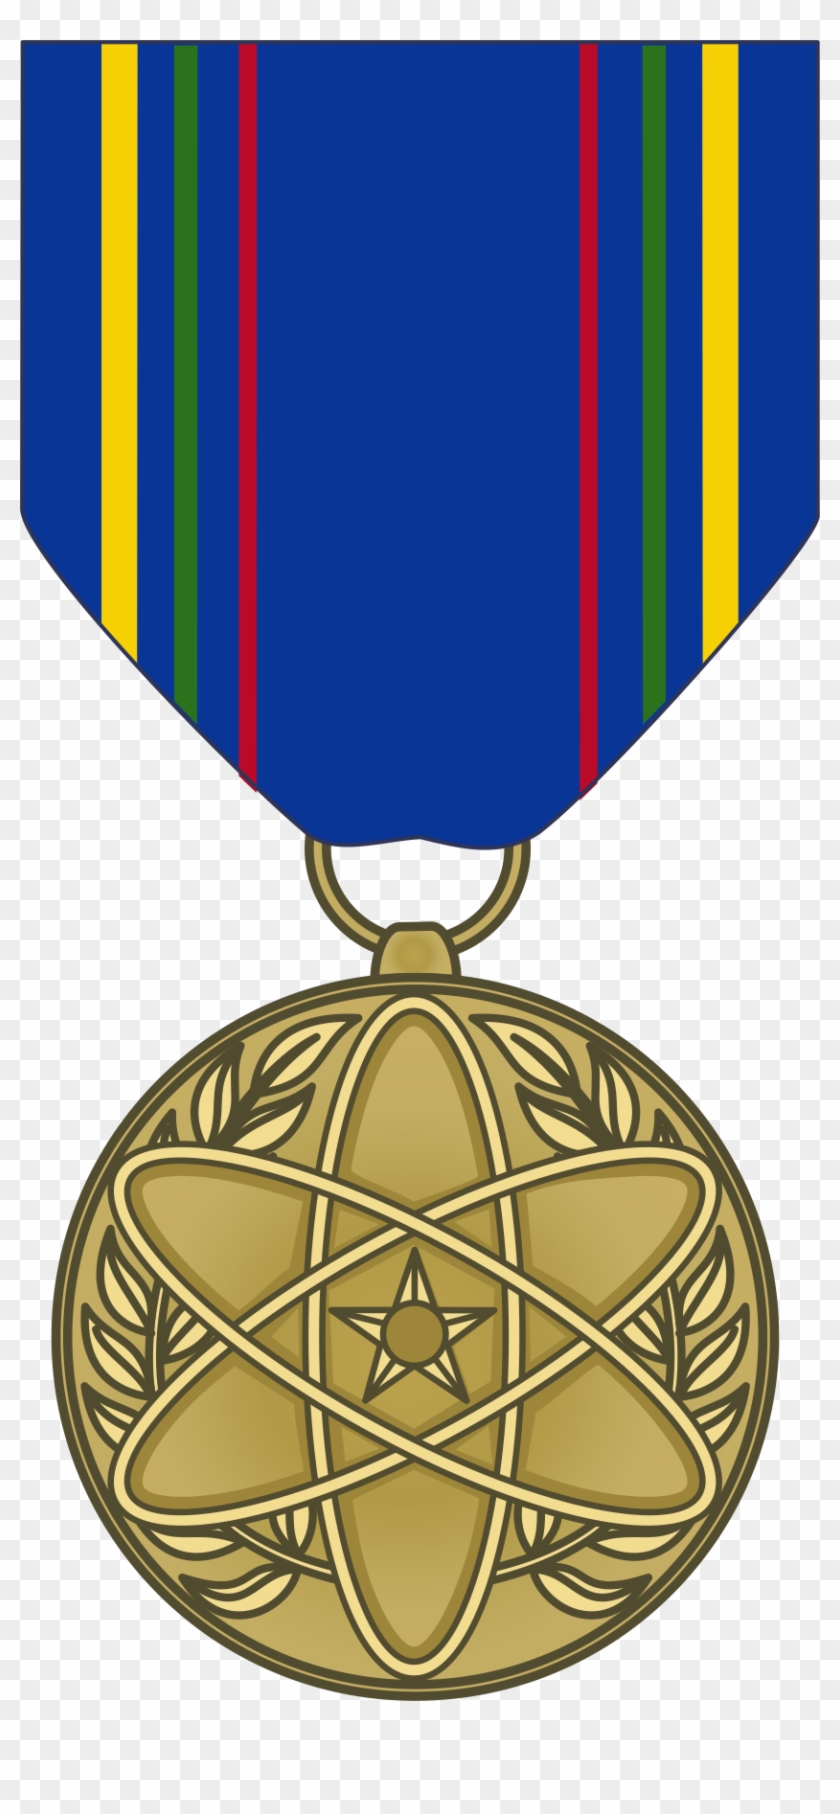 Download Full Image - Atomic Veterans Service Medal #80679